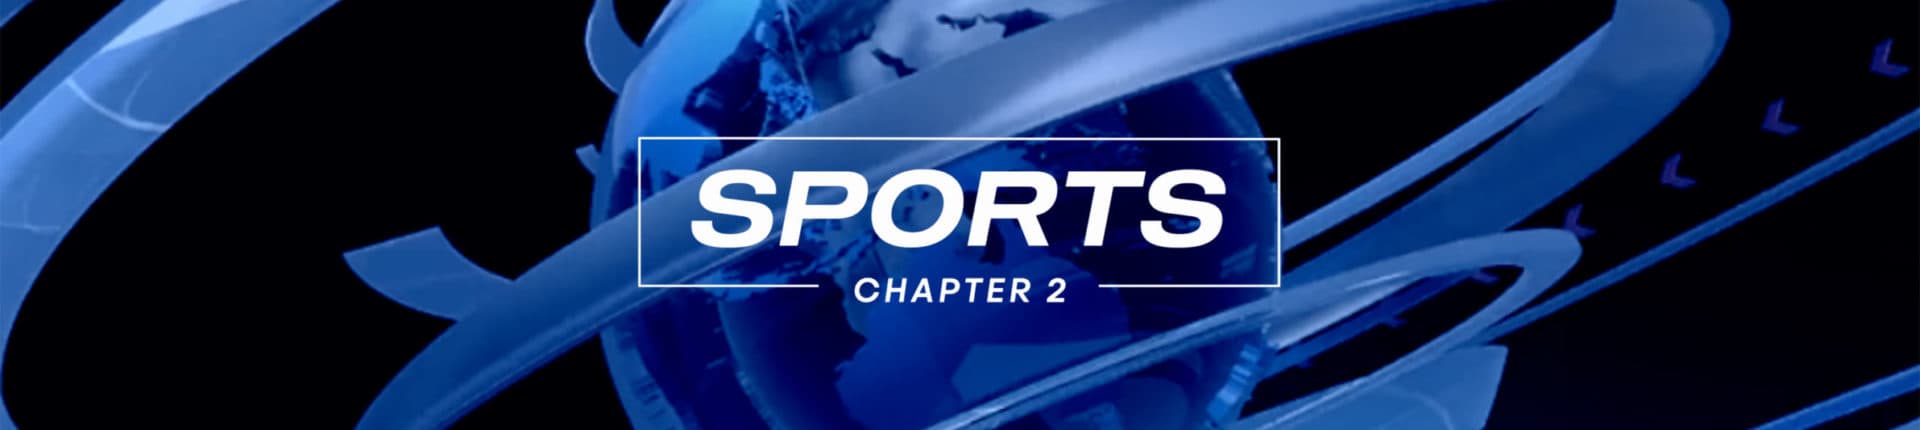 nightingale-tv-chapter2-sports-FW20-trends-video-livestream-technogym